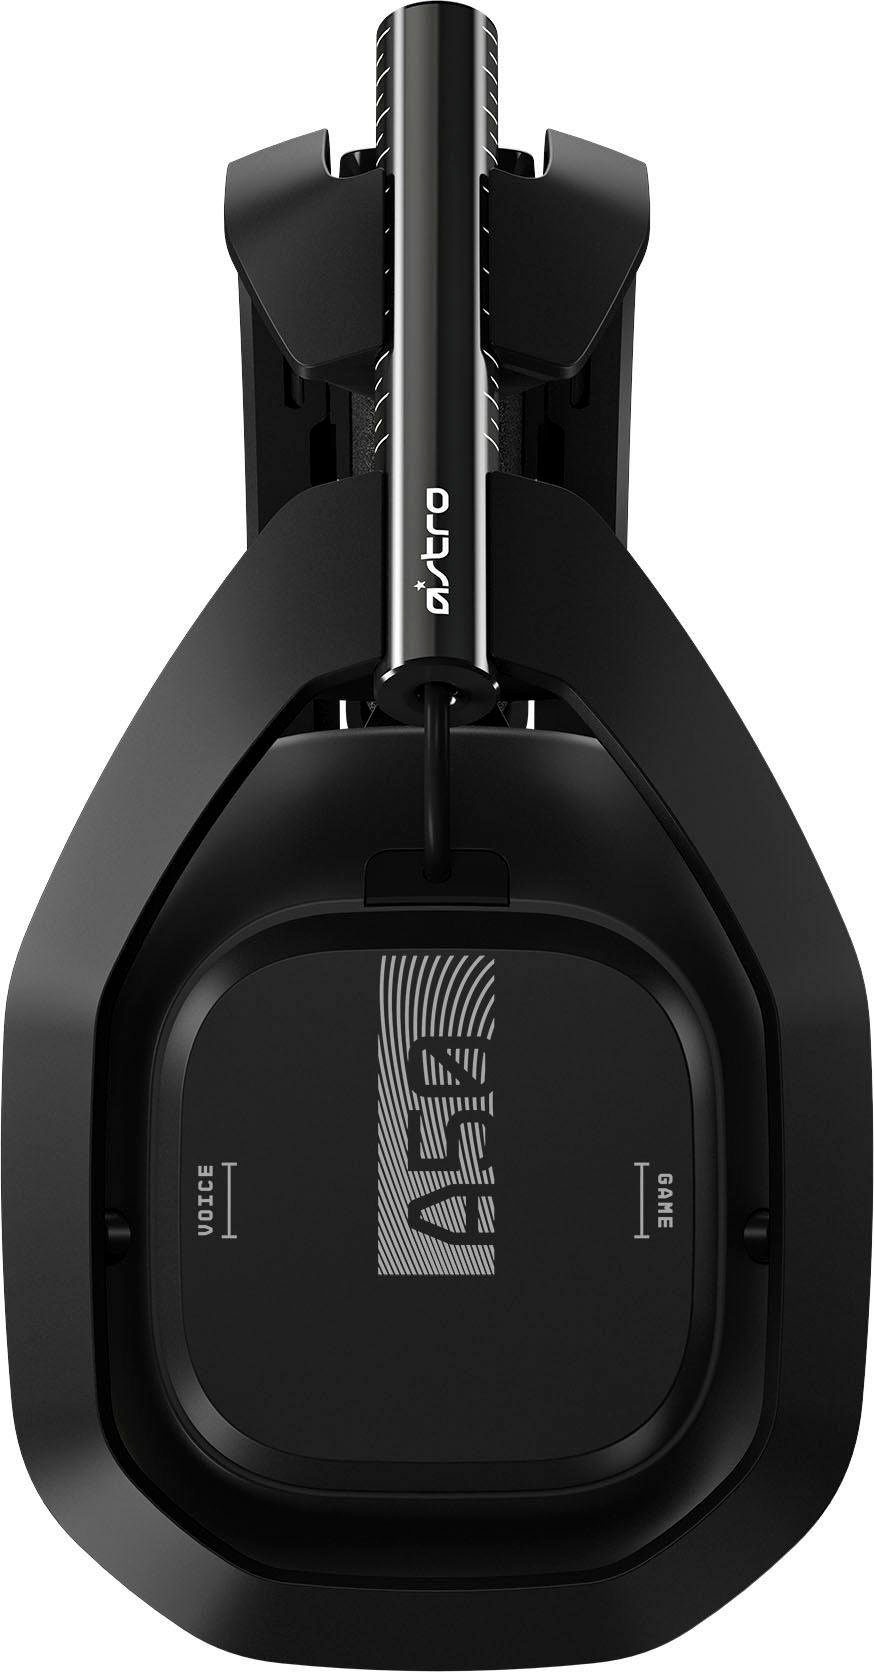 ASTRO Gaming-Headset »A50«, Rauschunterdrückung, inkl. Raten kaufen auf PS5 DualSense Wireless-Controller